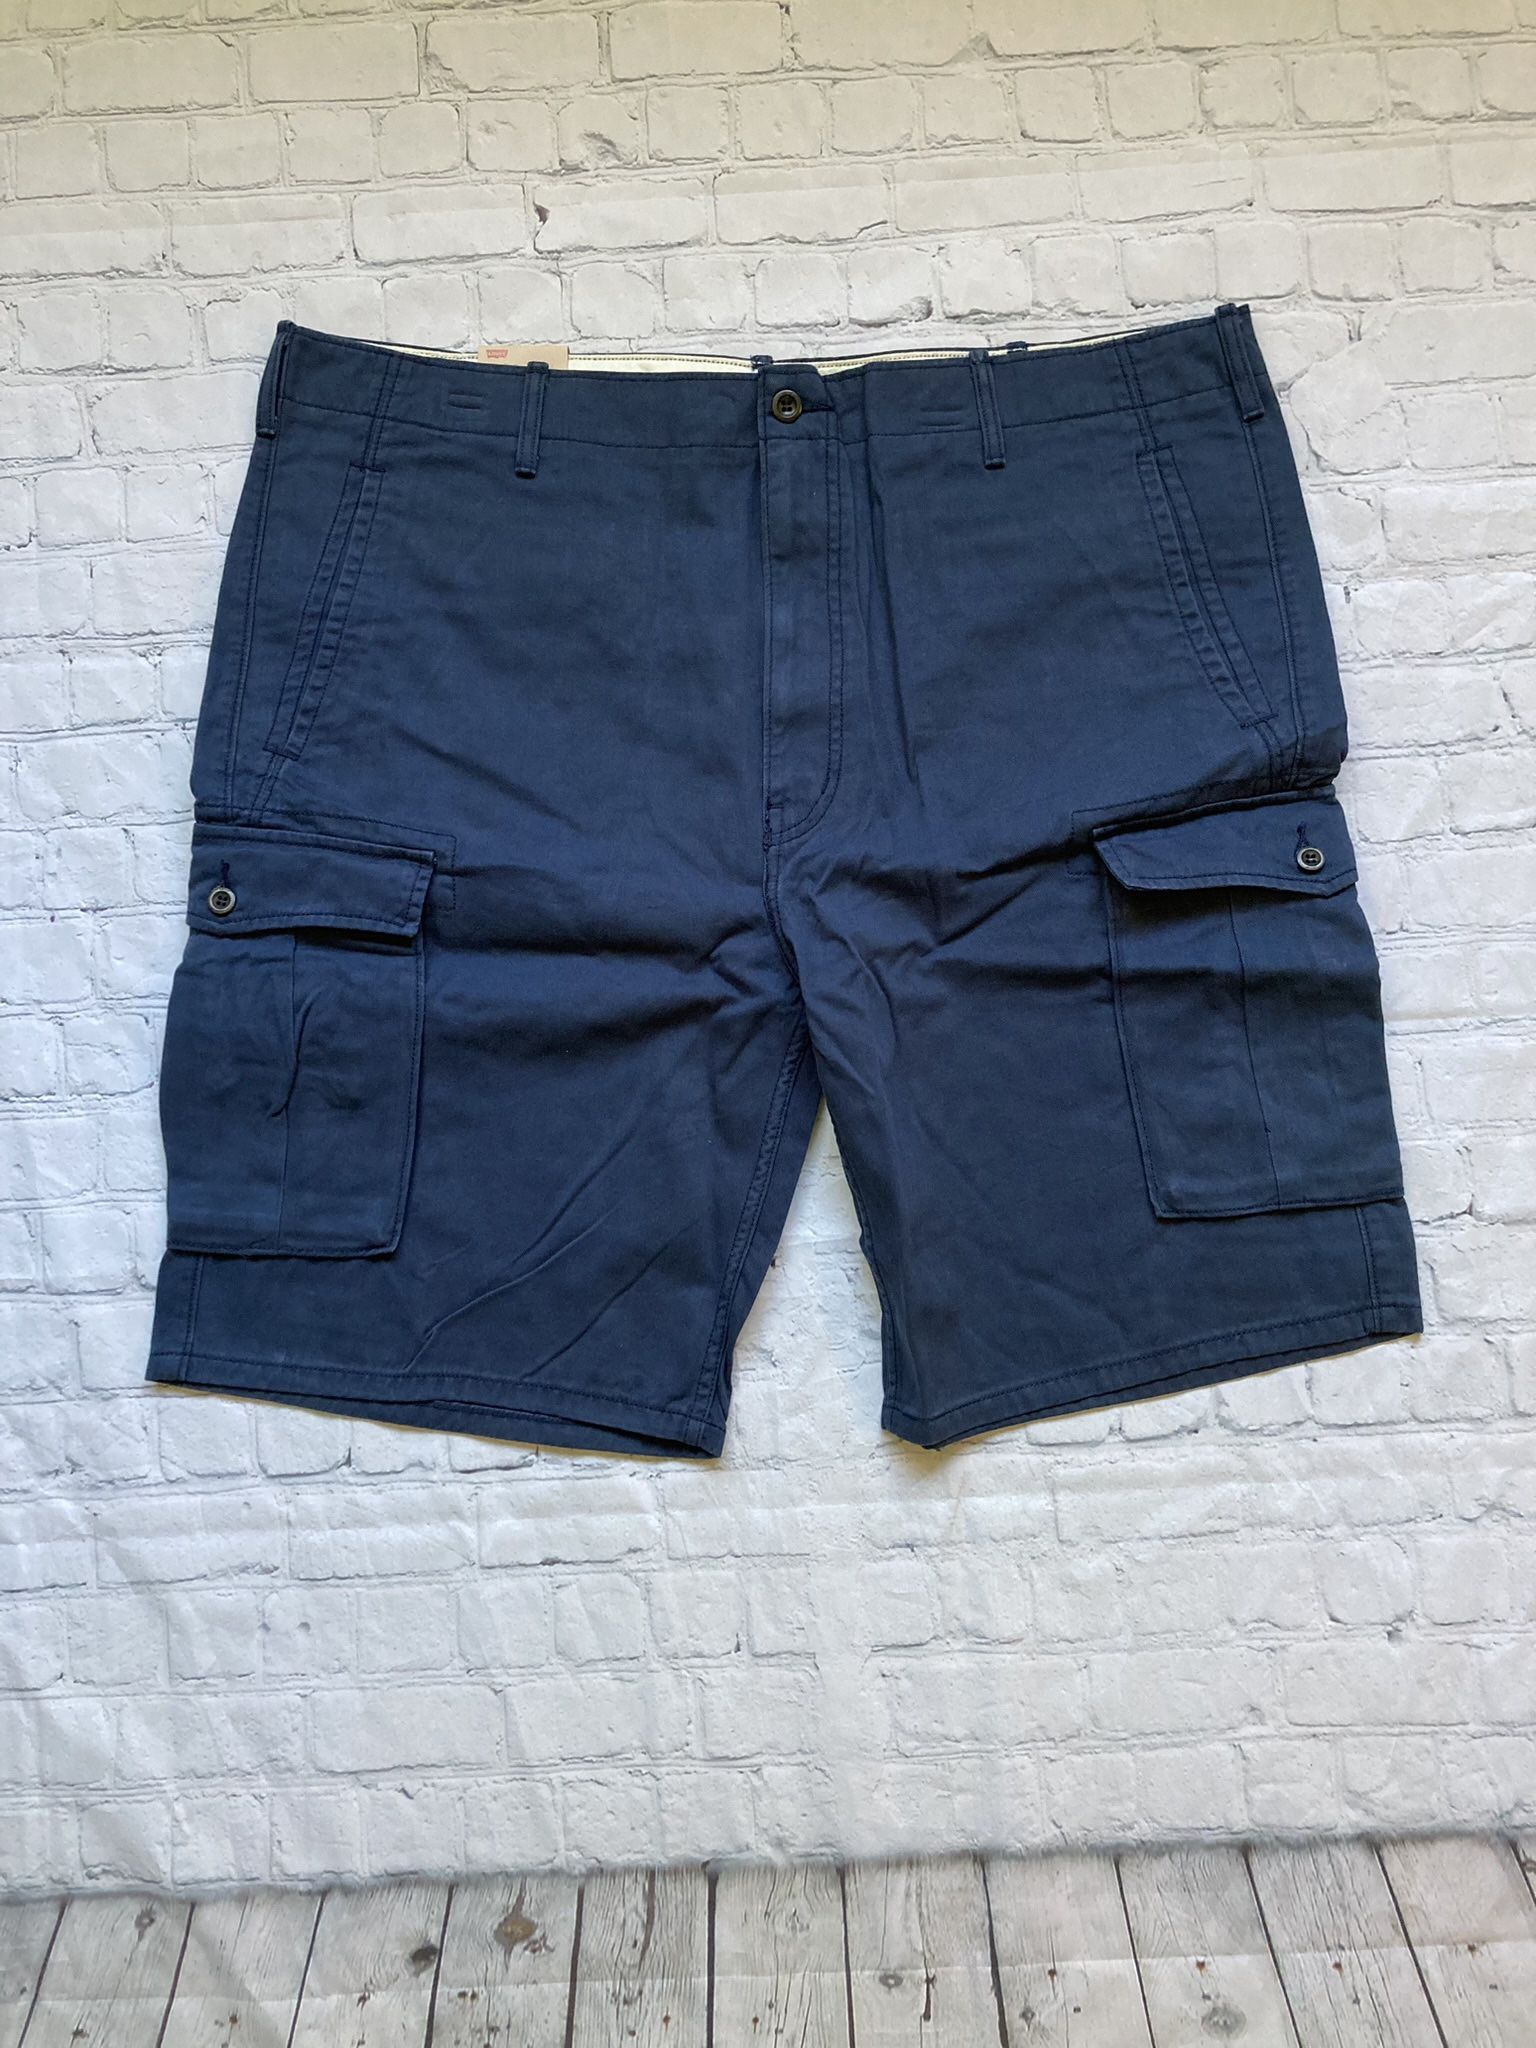 Men's Levi's Navy Blue Cargo I Shorts, Size 42 W, NWT